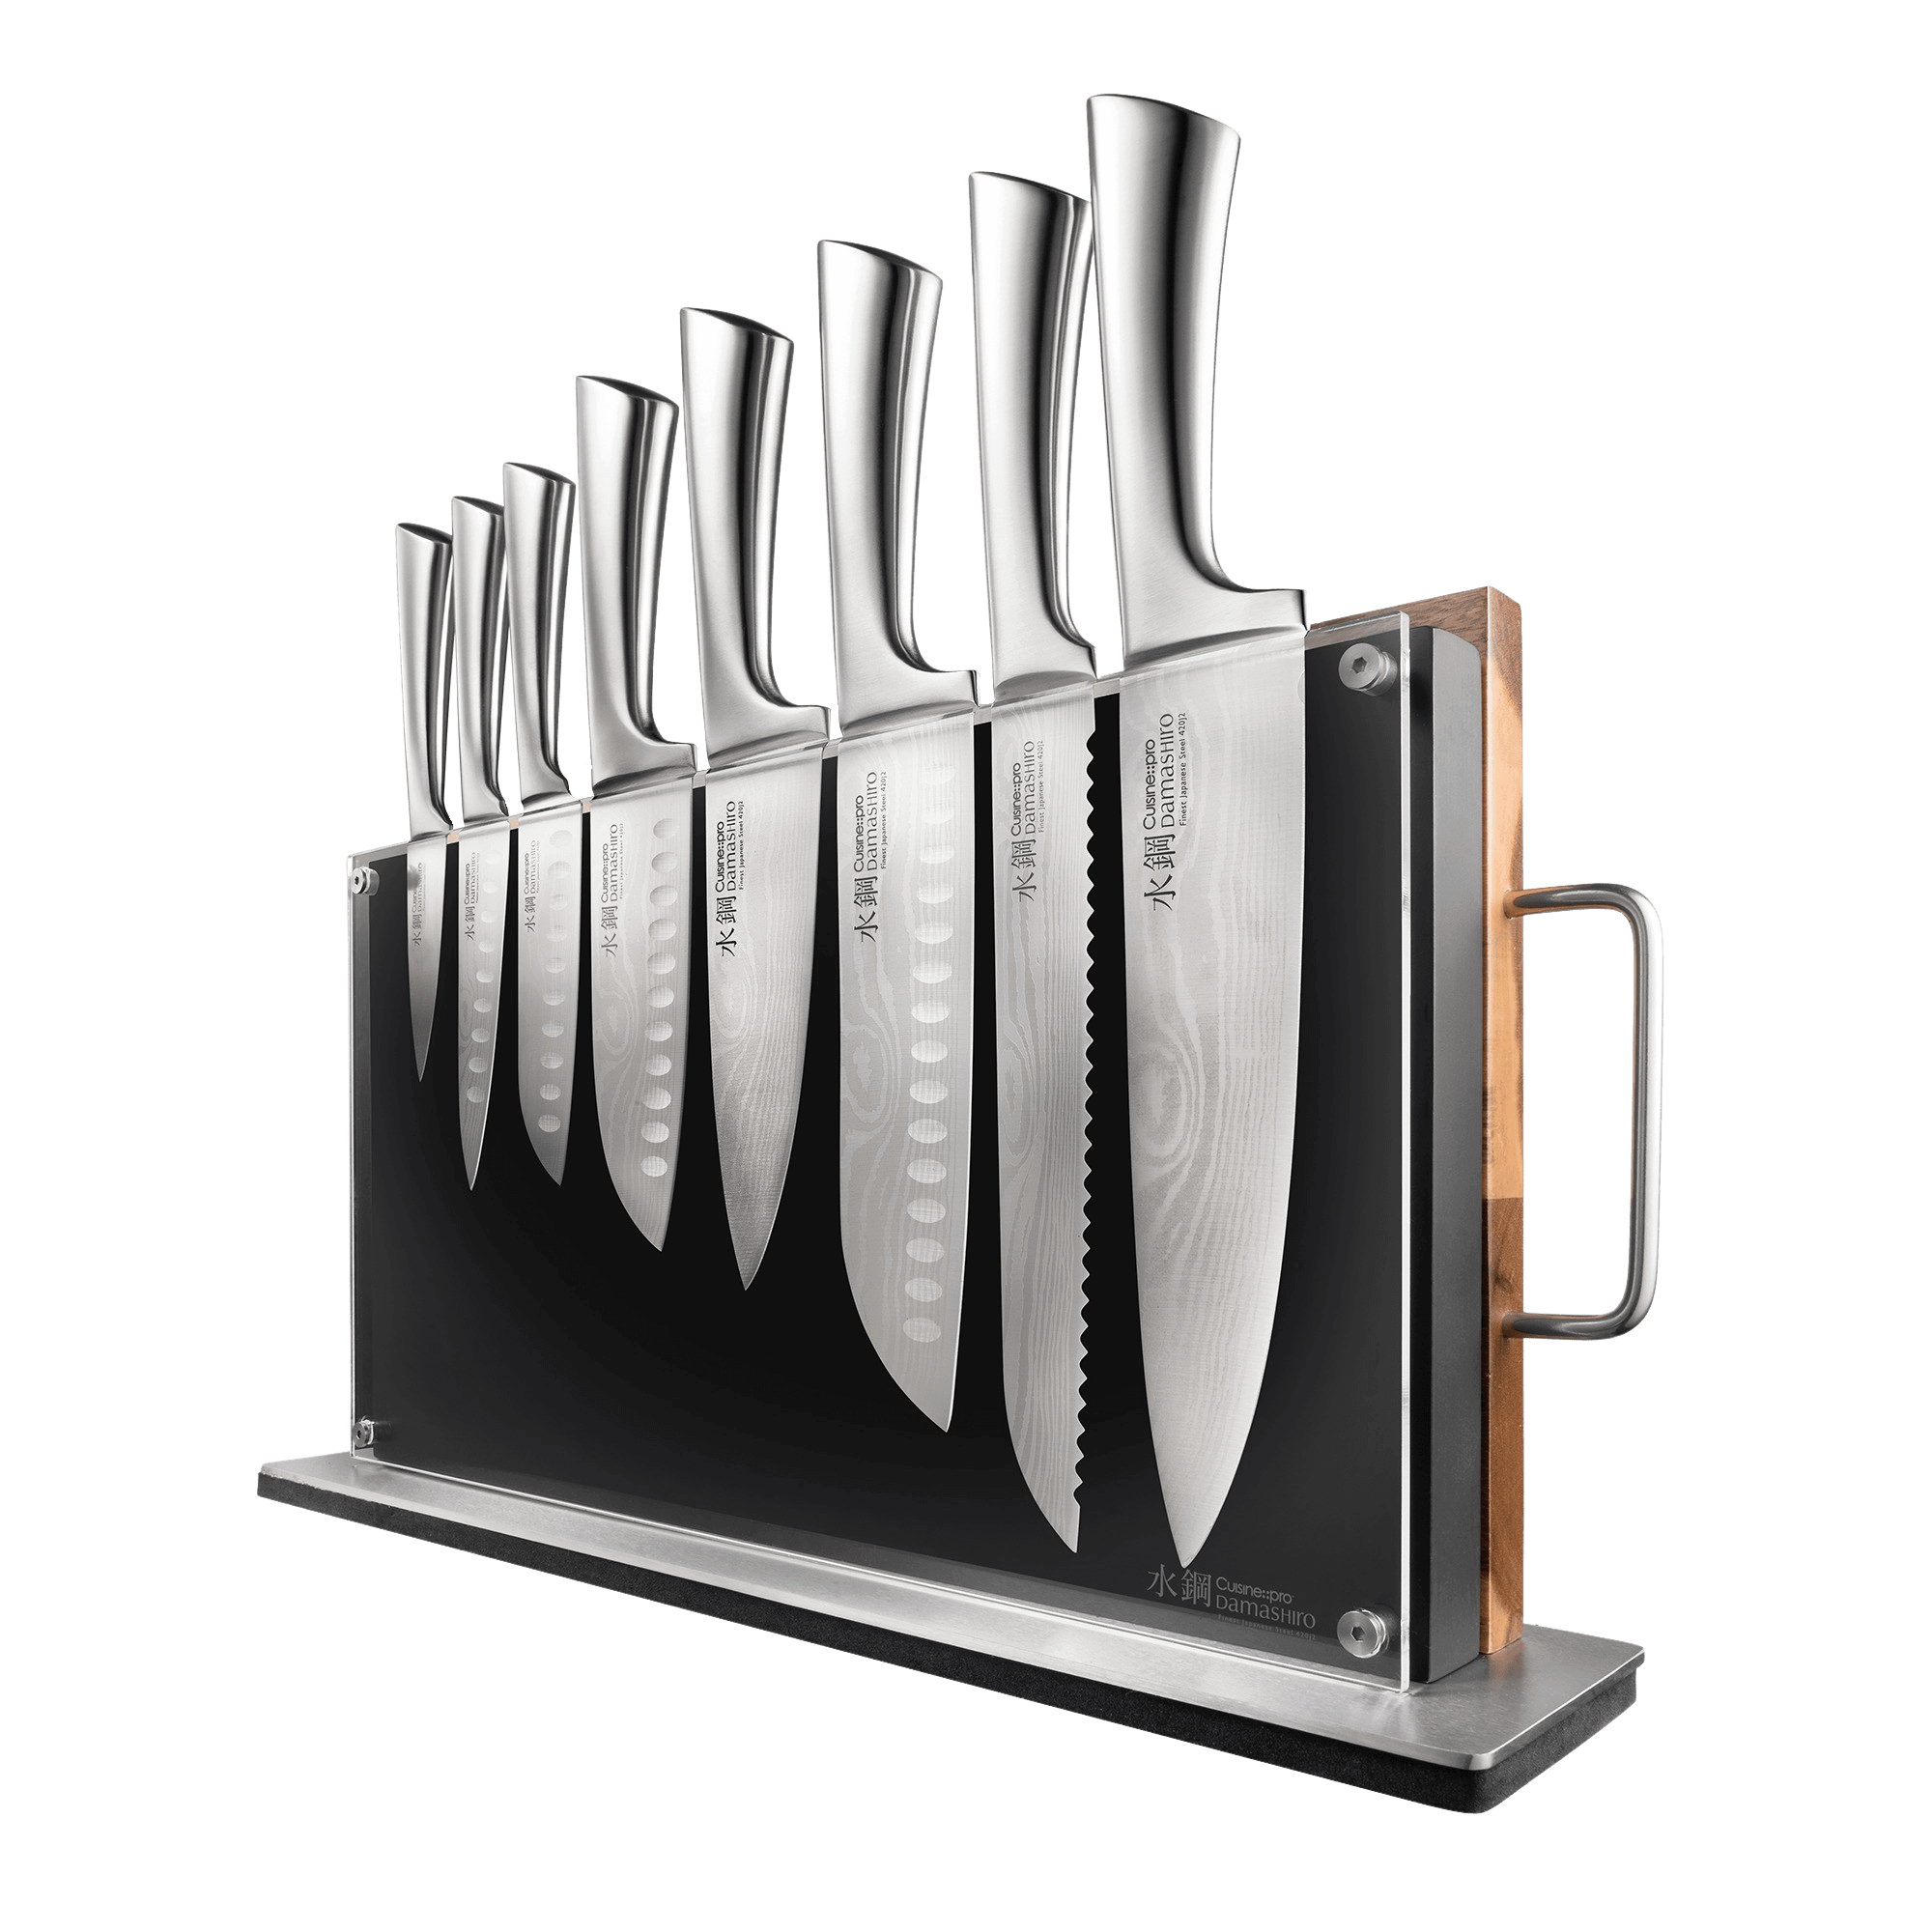 Cuisine::pro® Damashiro® Bodo 10 Piece Knife Block with Chopping Board-1034444